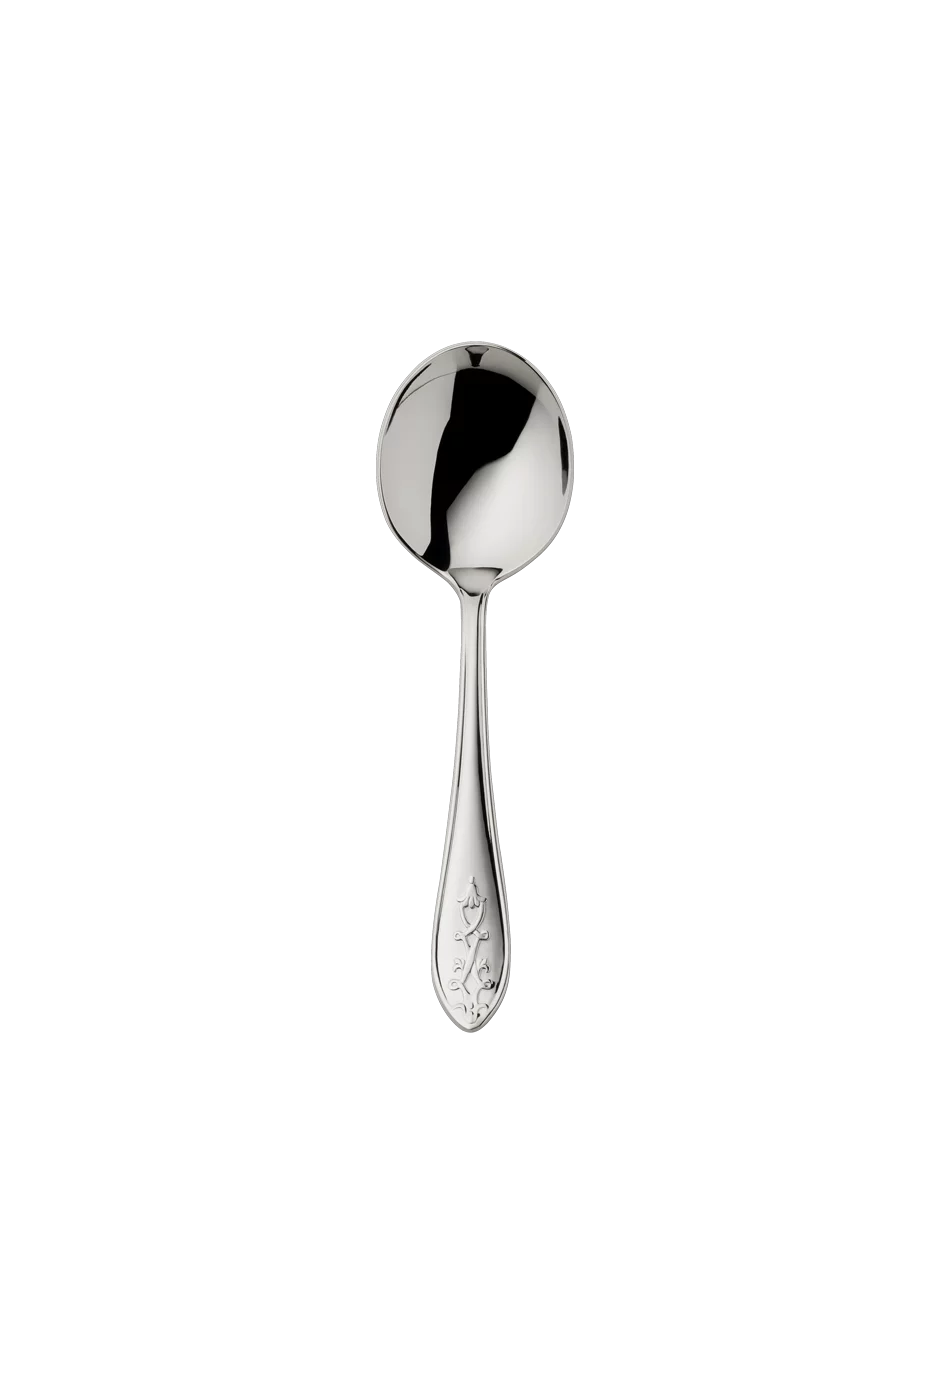 Jardin Cream Spoon (Broth Spoon) (18/8 stainless steel)